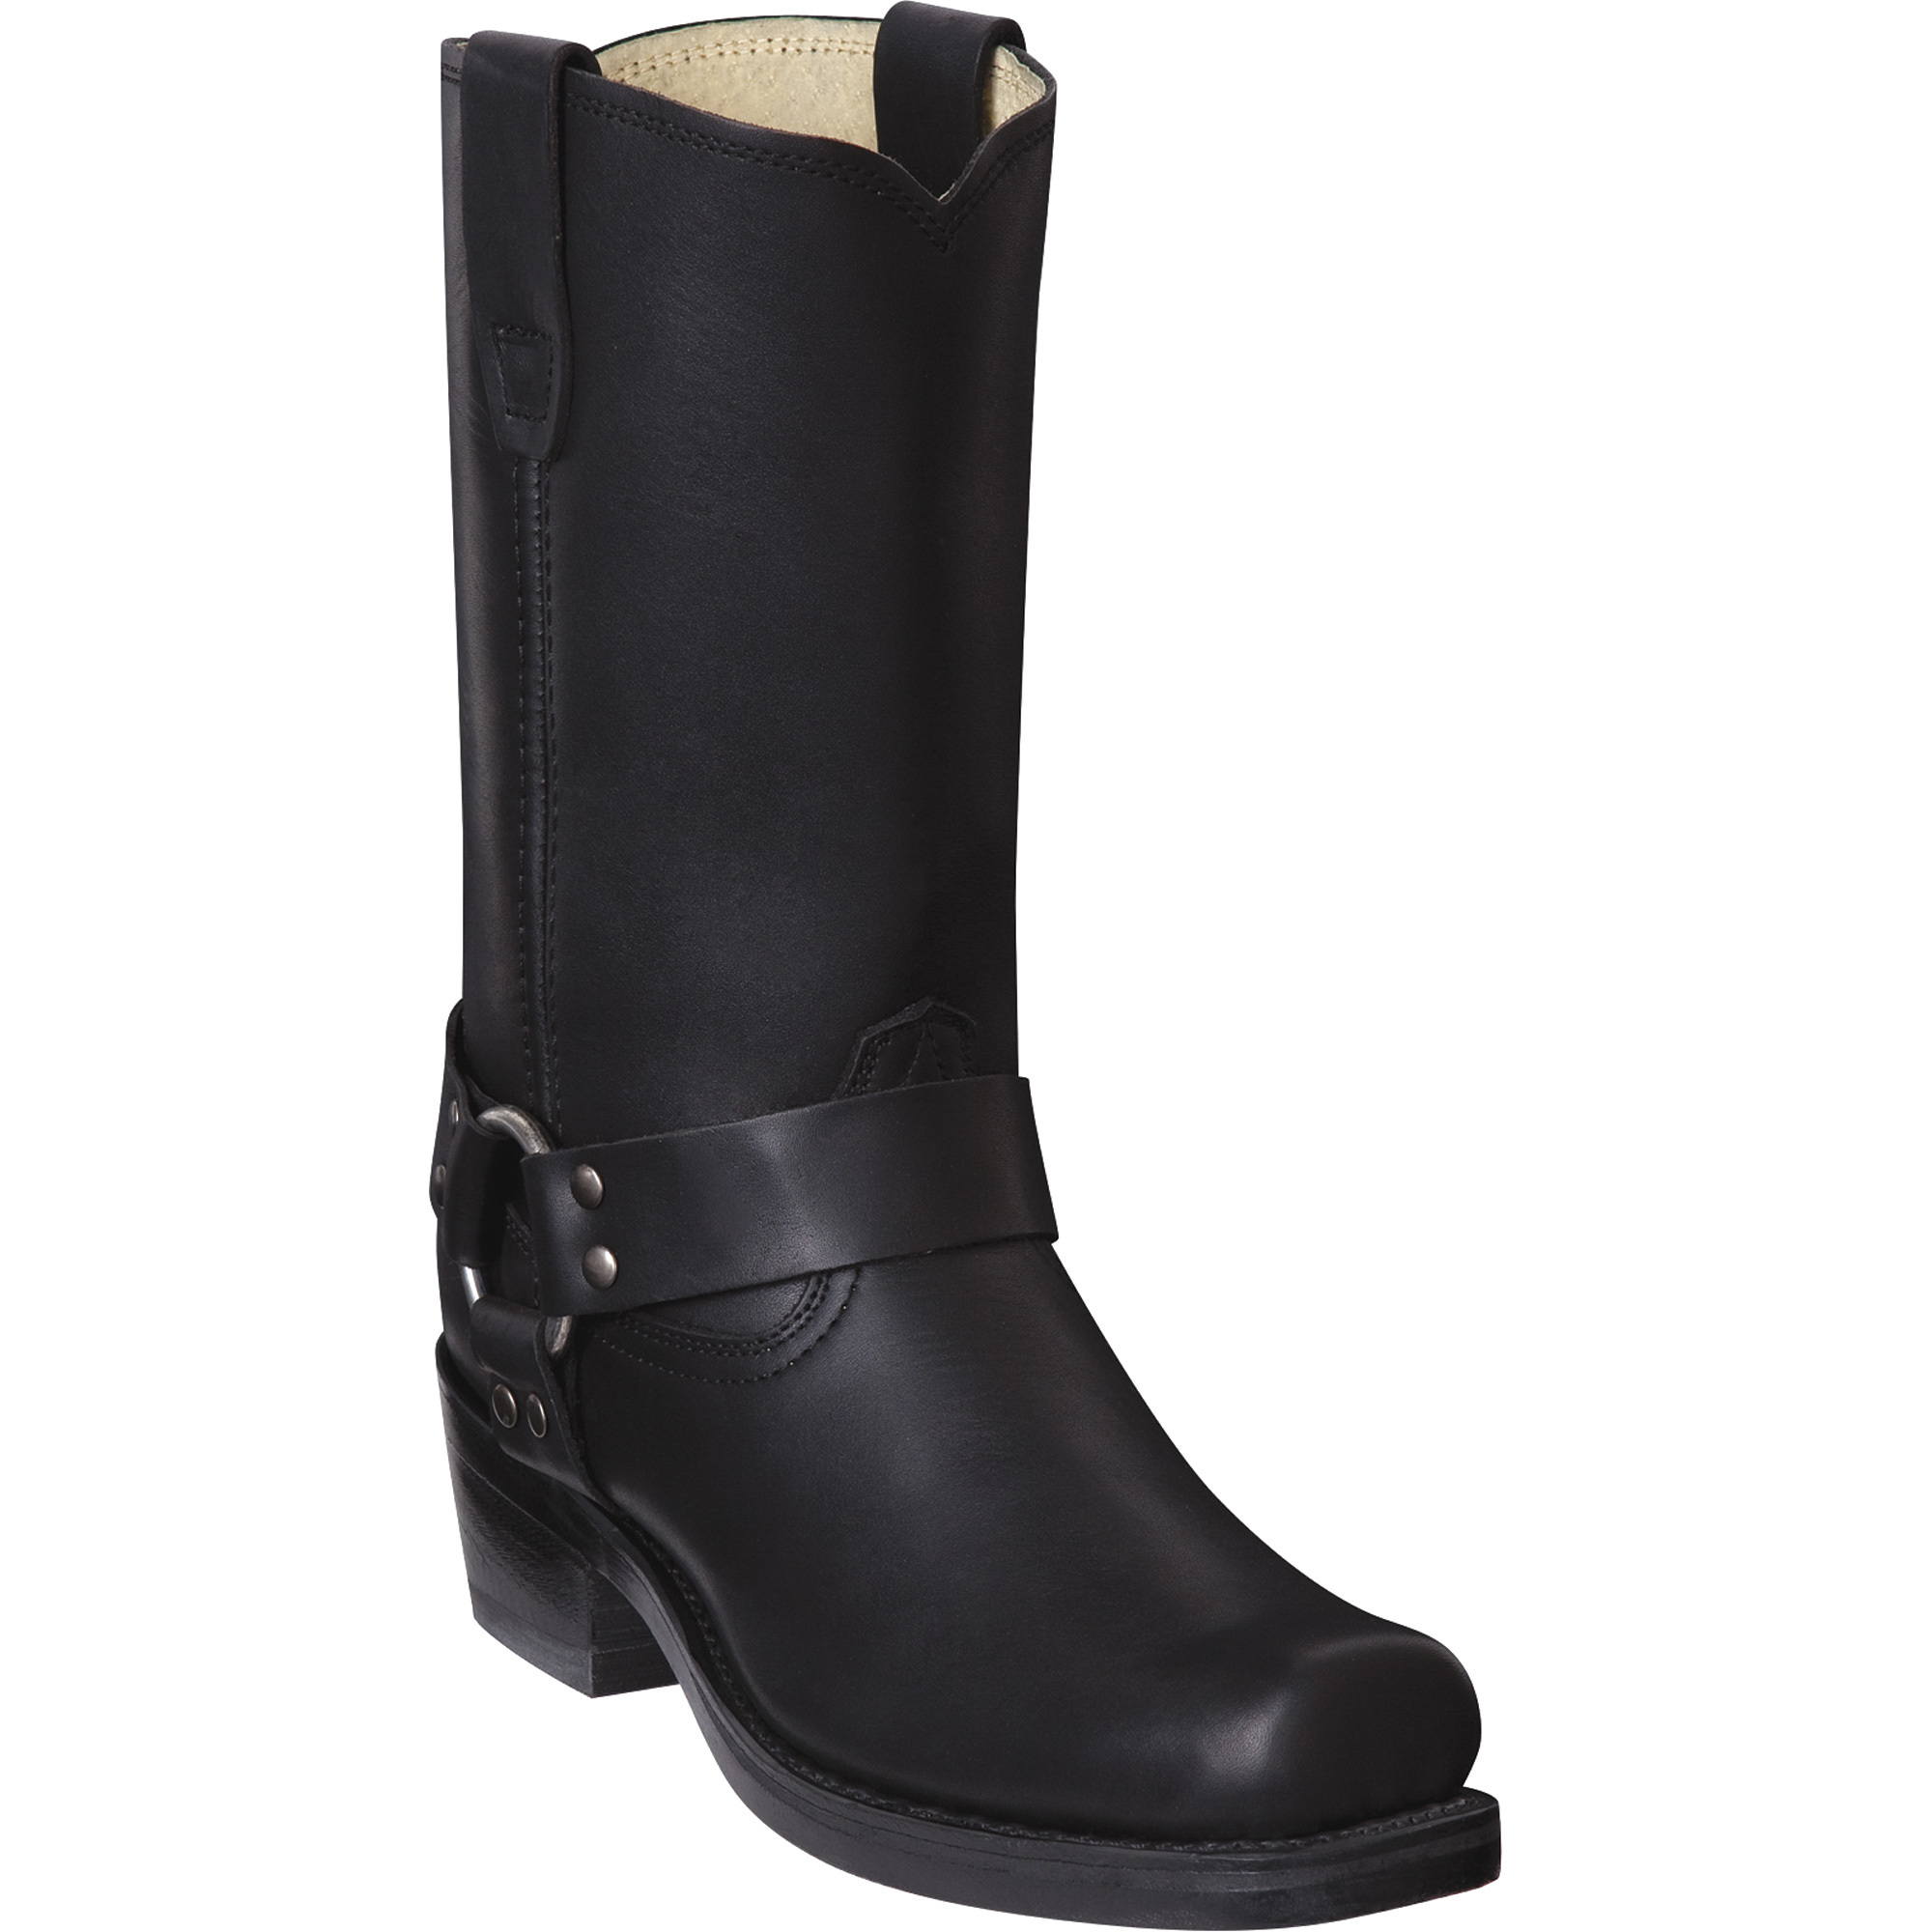 Durango Men's 11Inch Harness Boot - Black, Size 7 1/2, Model DB 510